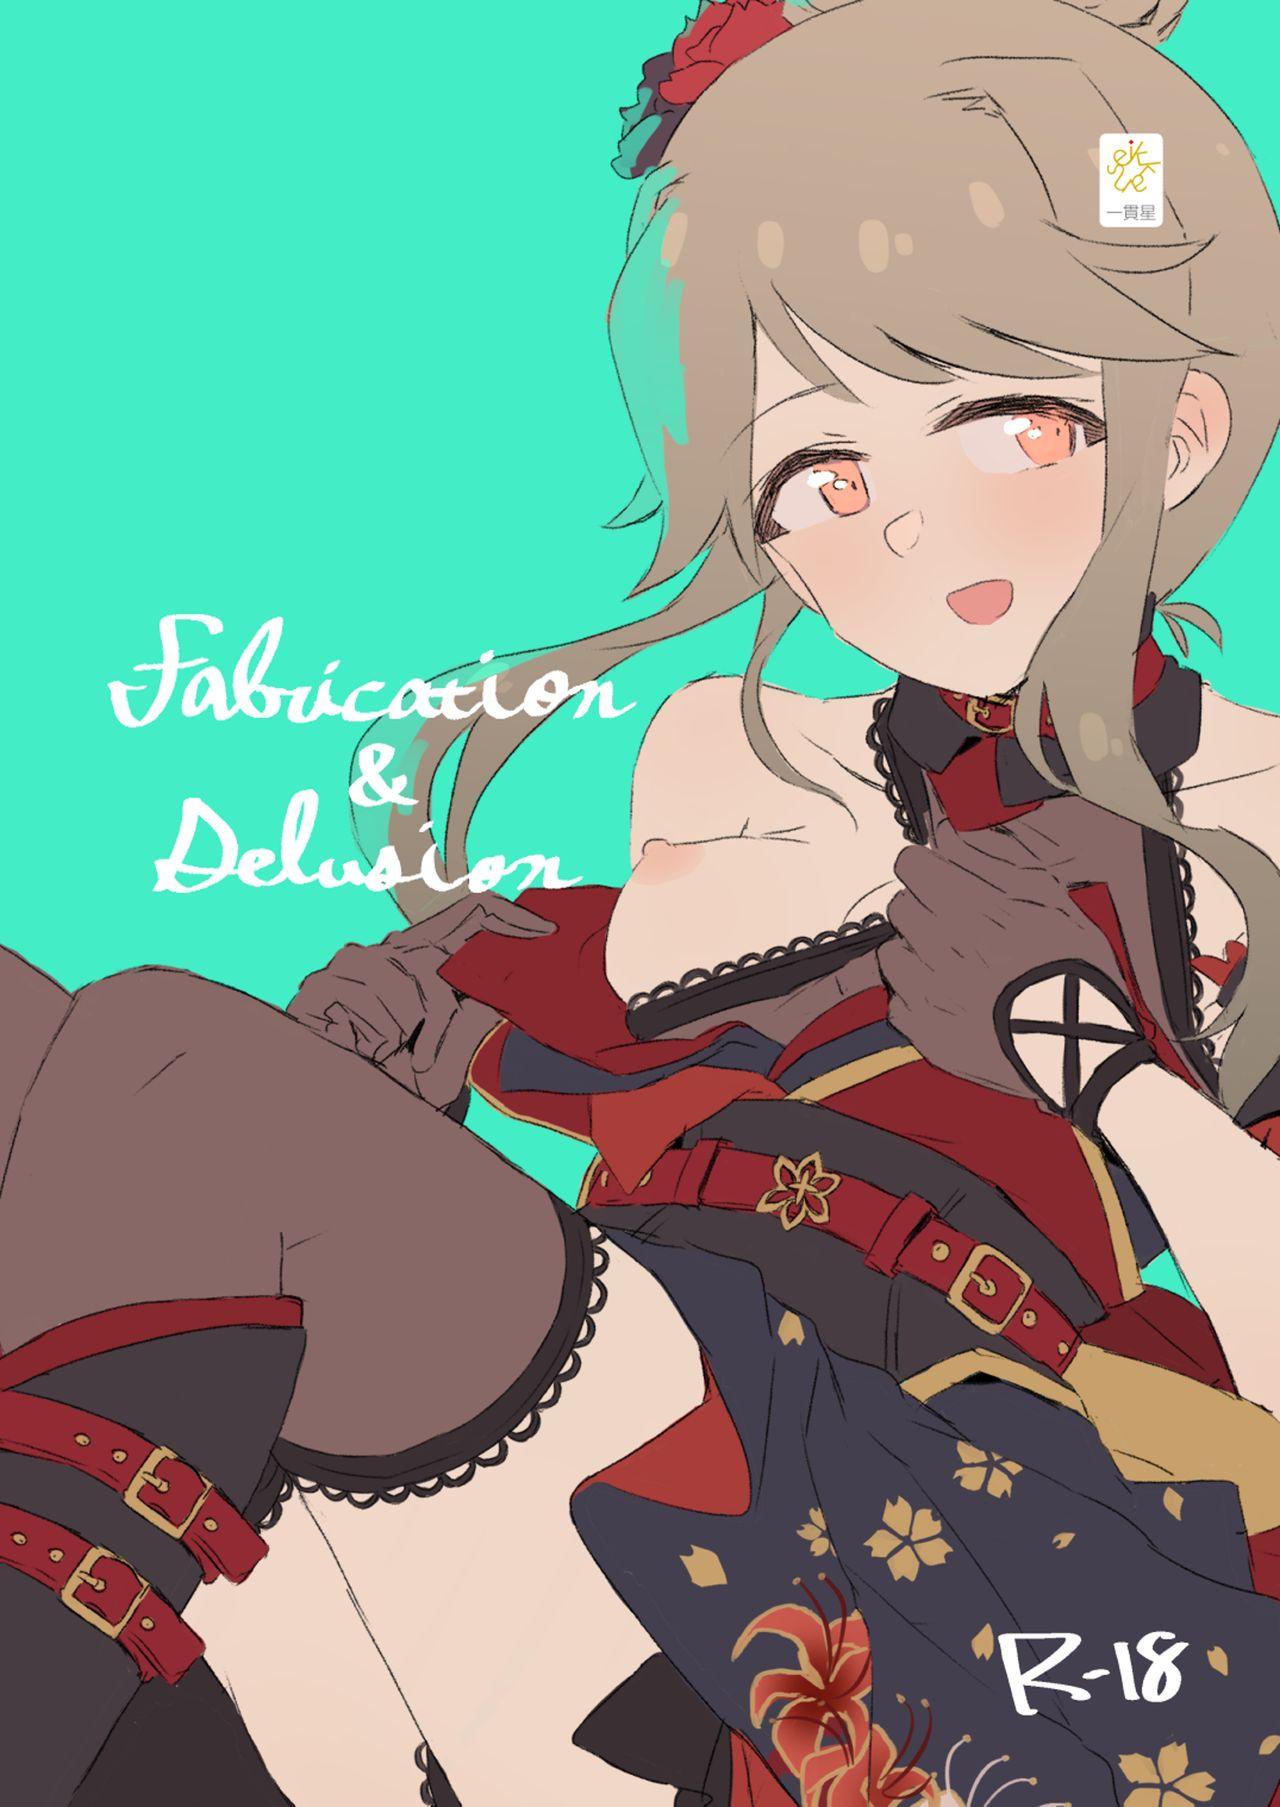 Fabrication&Delusion 2